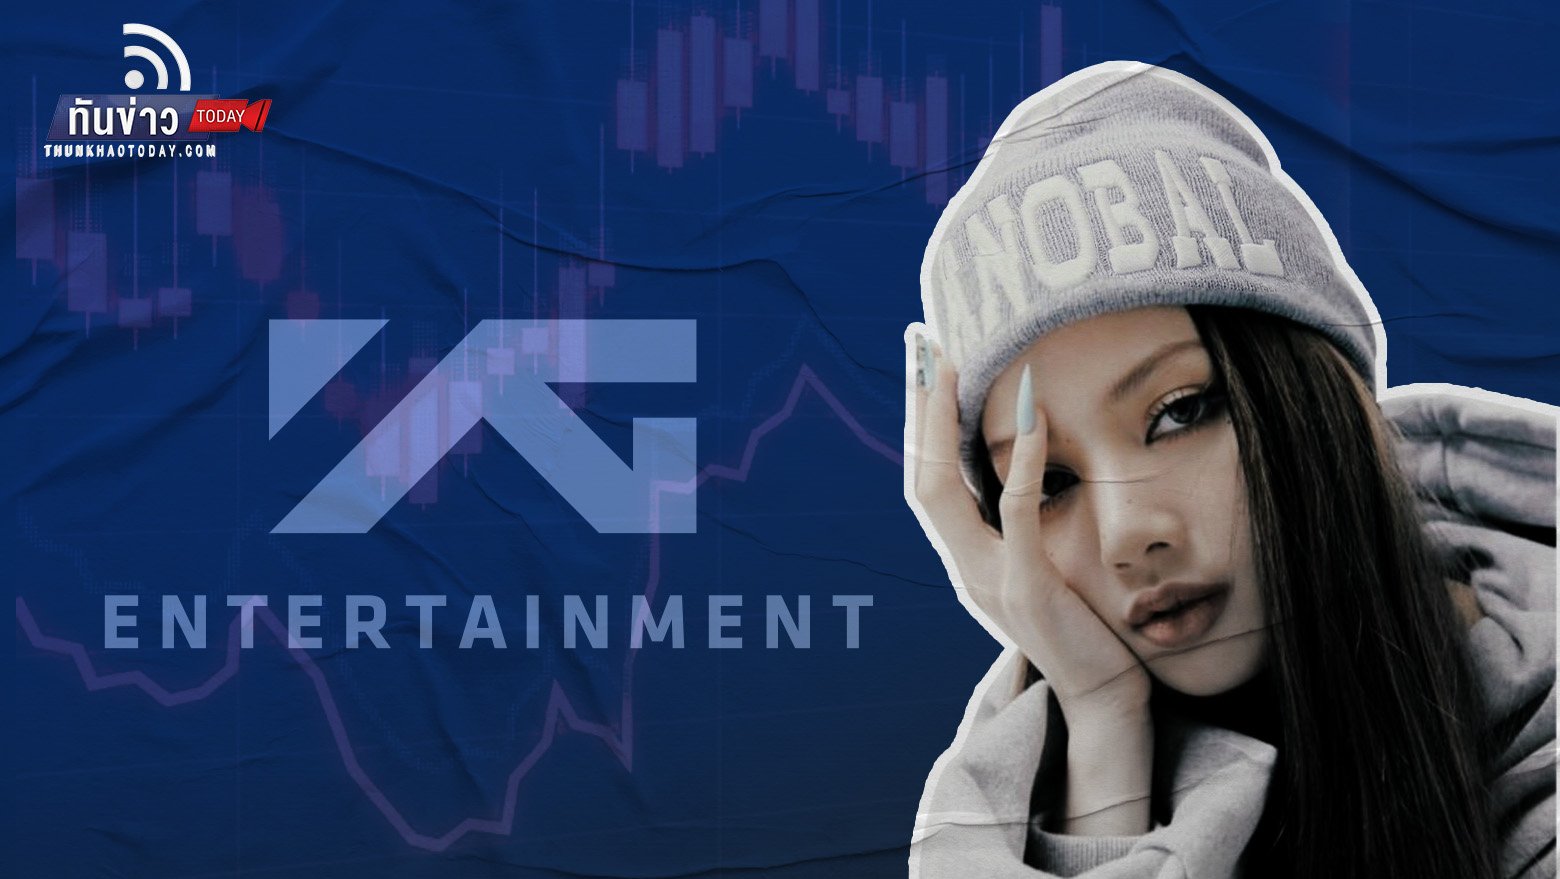 Lisa Blackpink ศิลปิน K-Pop ไม่ต่อสัญญาต้นสังกัด ทำหุ้น YG Entertainment ร่วง 9% ในวันนี้